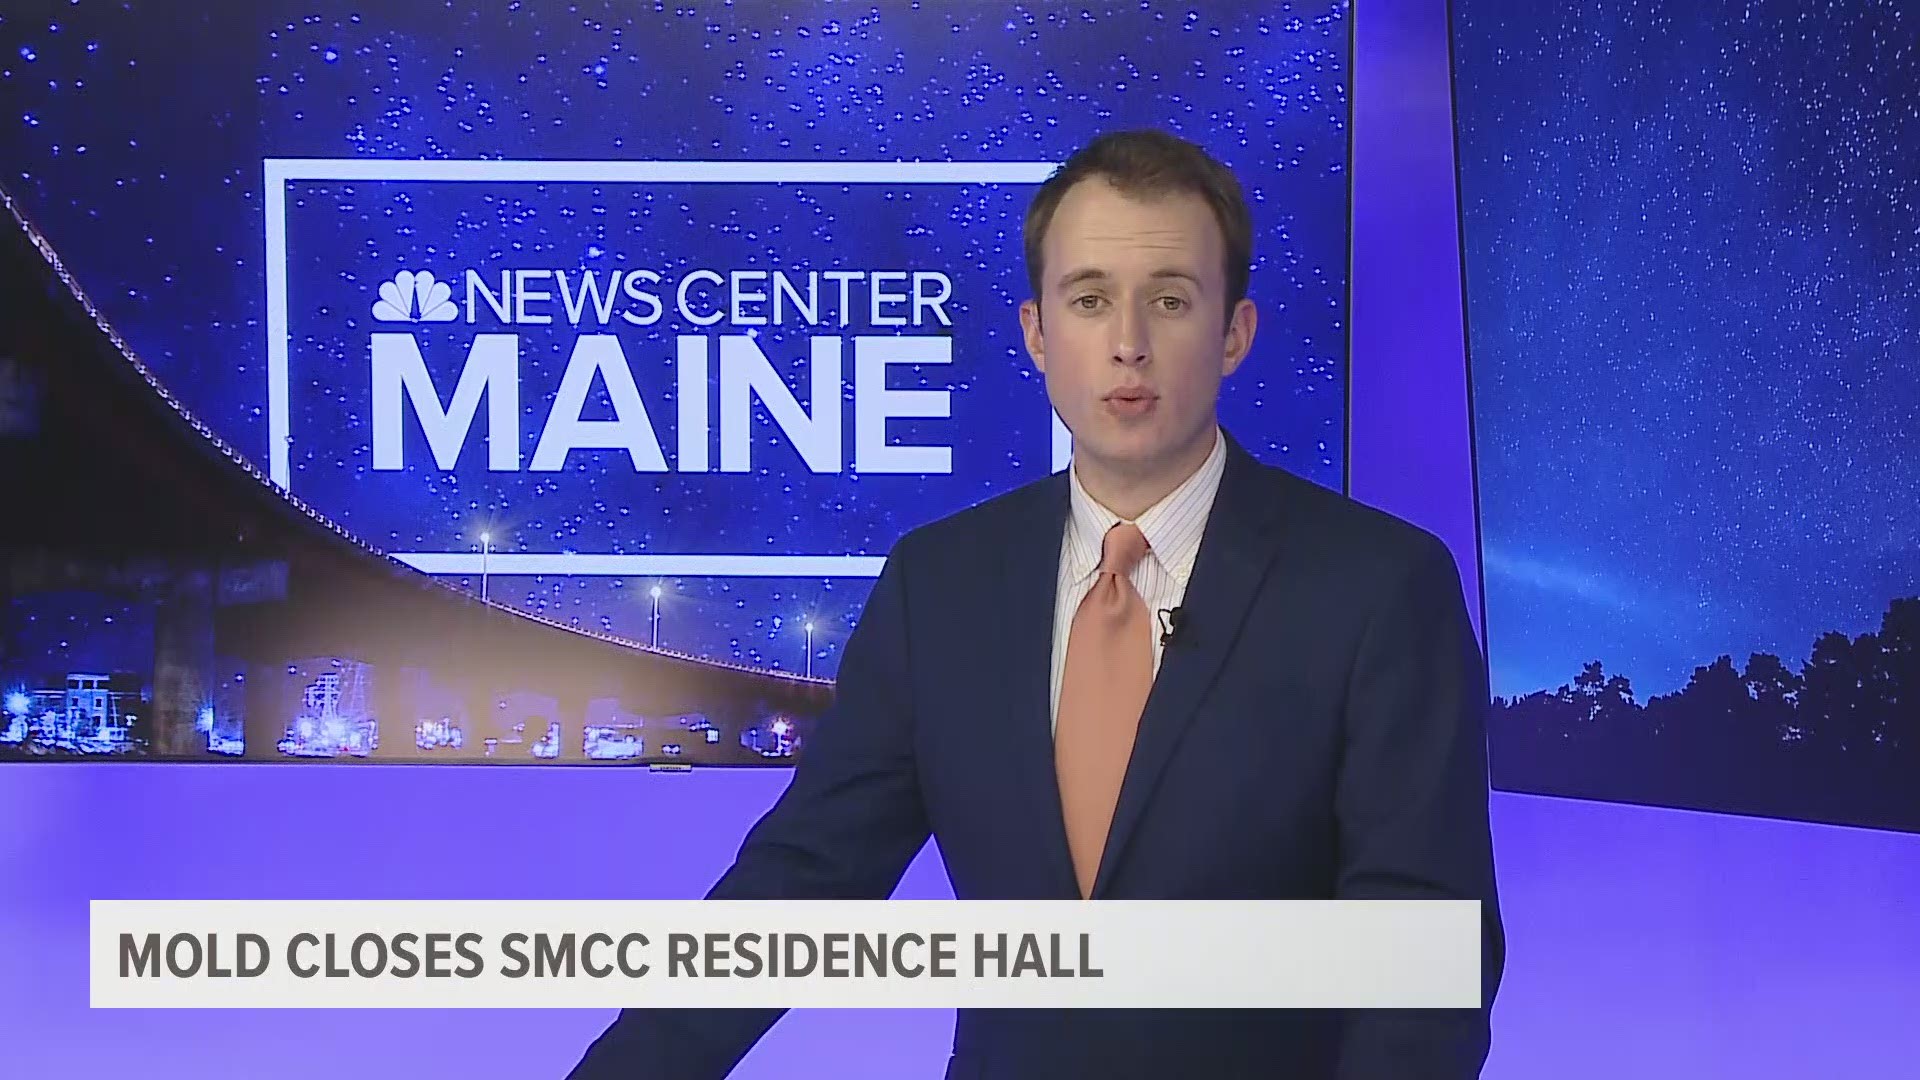 Mold closes SMCC residence hall